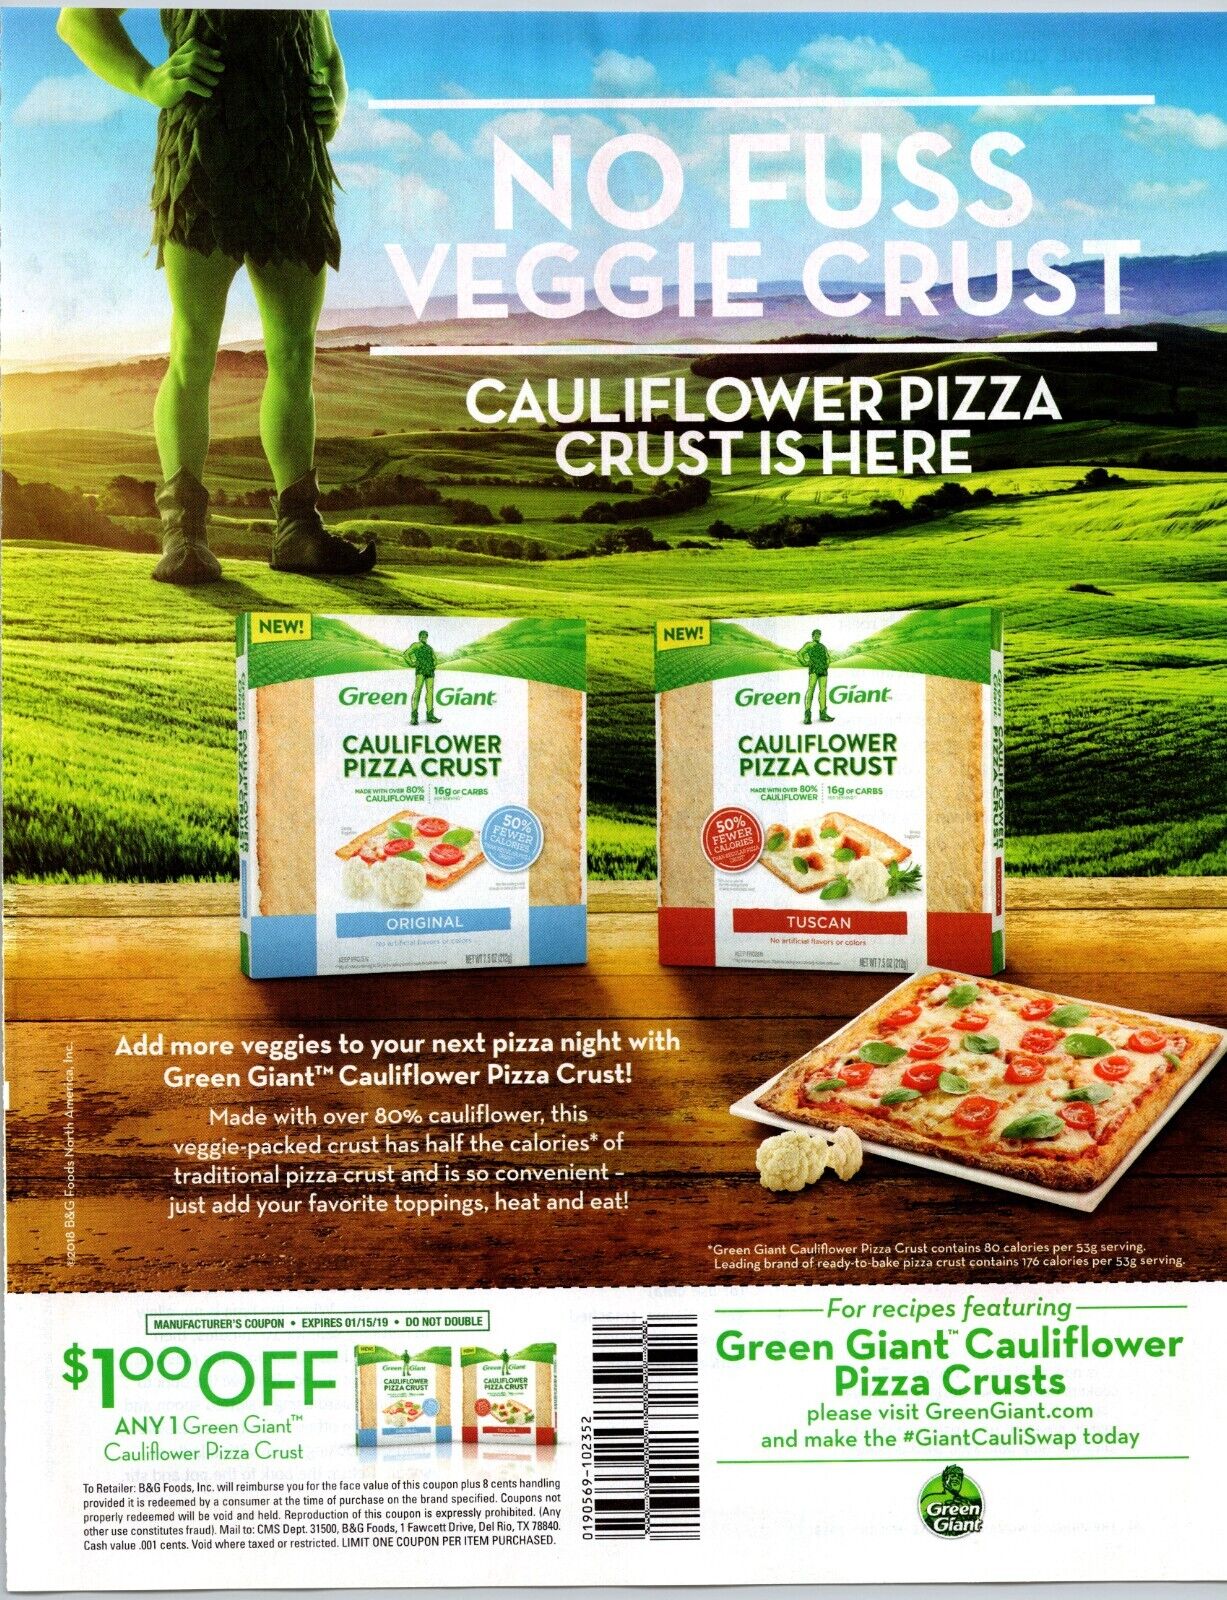 2018 Green Giant Cauliflower Pizza Crust Original & Tuscan Vegie Crust Print Ad